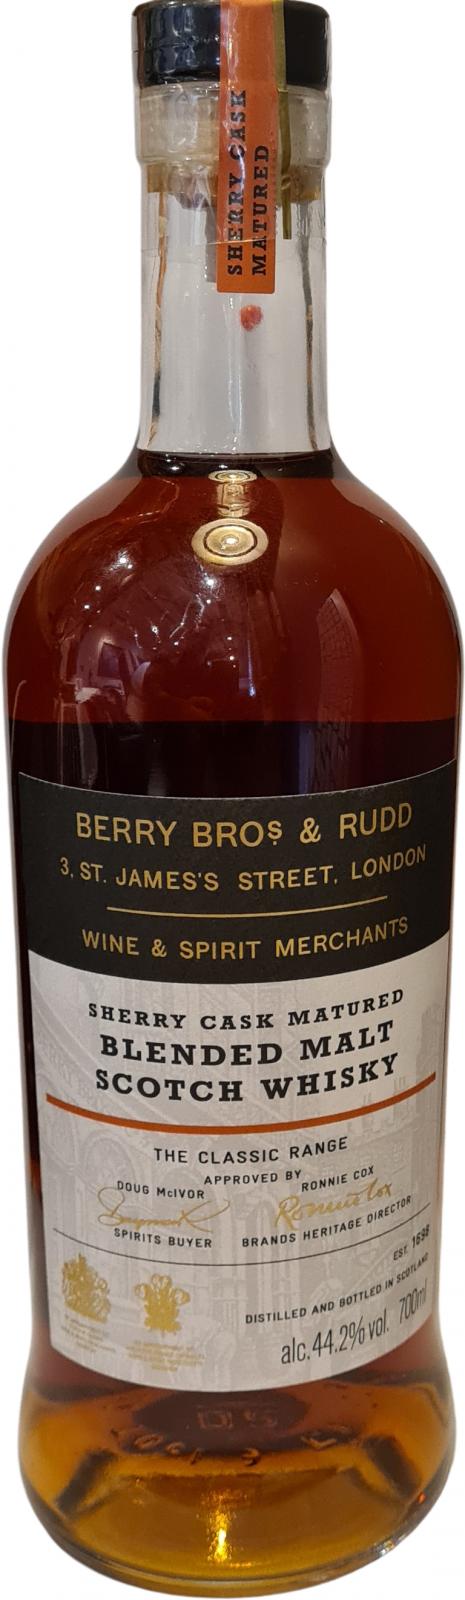 Blended Malt Scotch Whisky Sherry Cask Matured BR The Classic Range Batch 3 44.2% 700ml